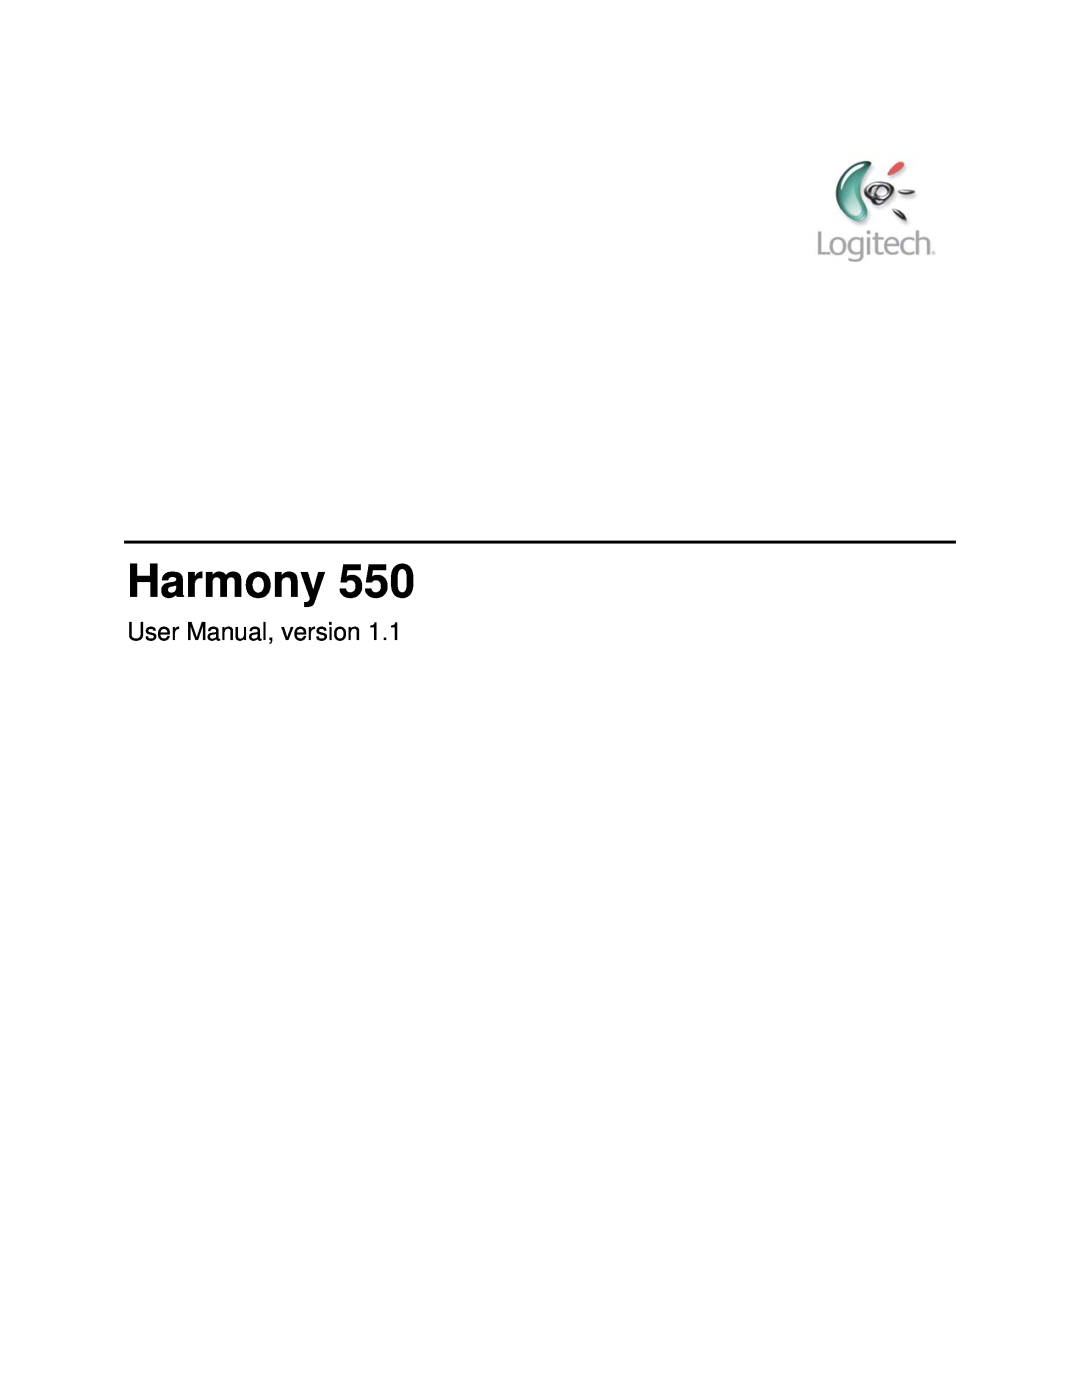 Logitech 550 user manual Harmony, User Manual, version 